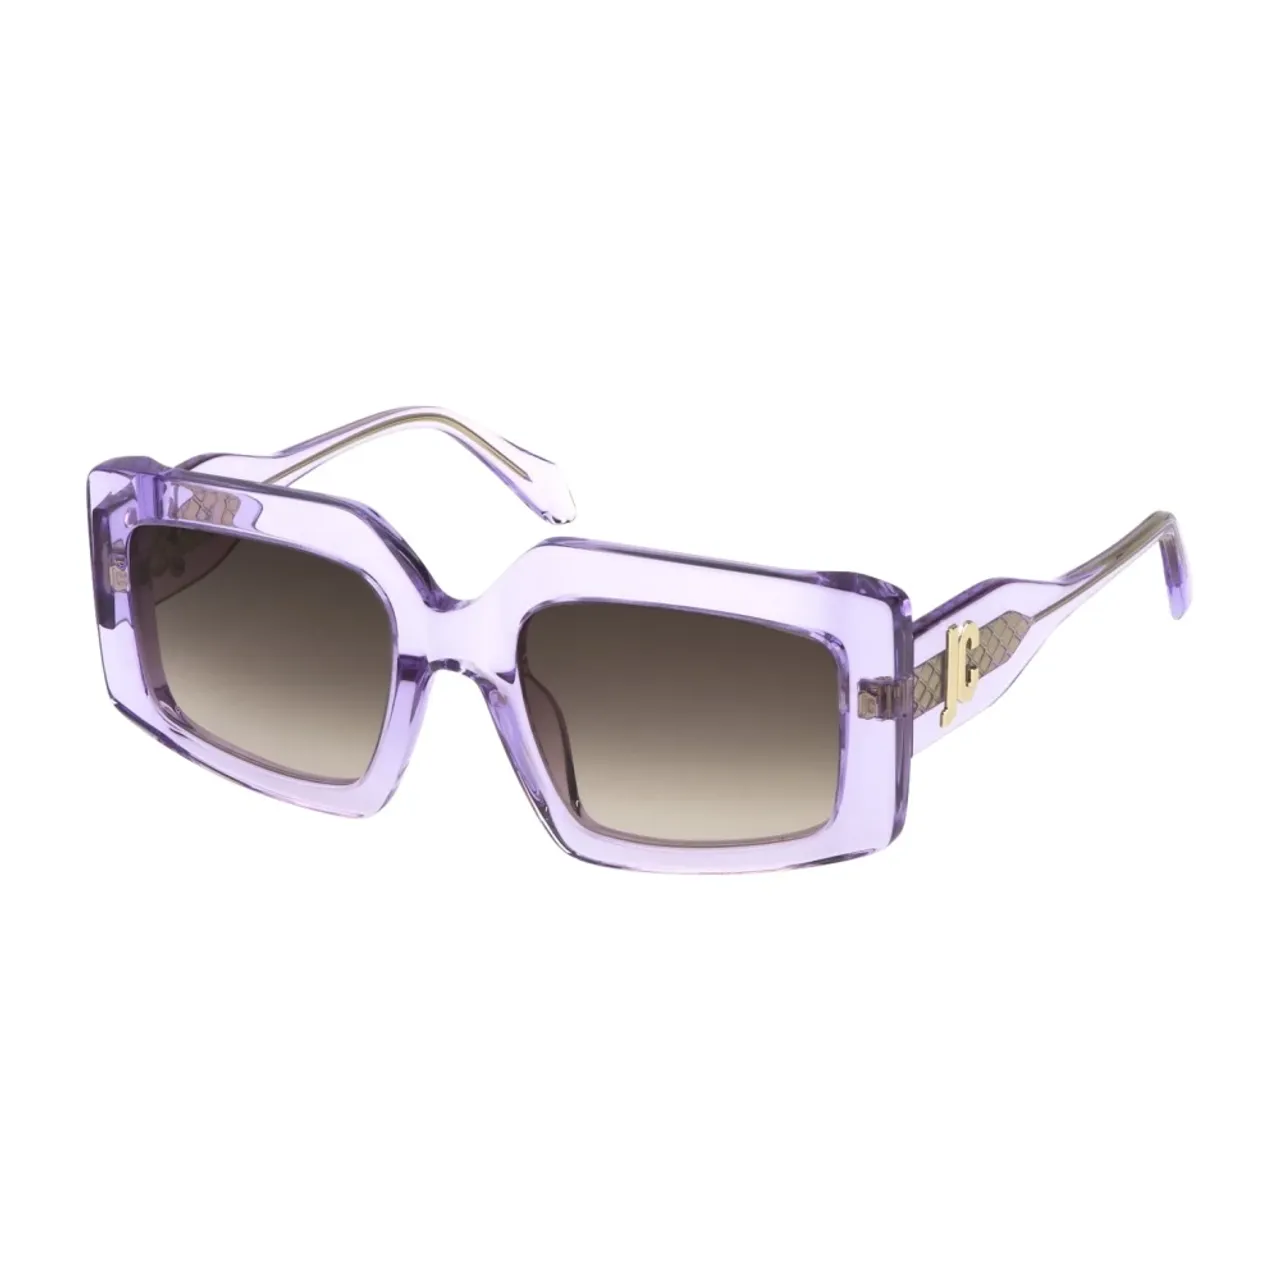 Sunglasses Just Cavalli